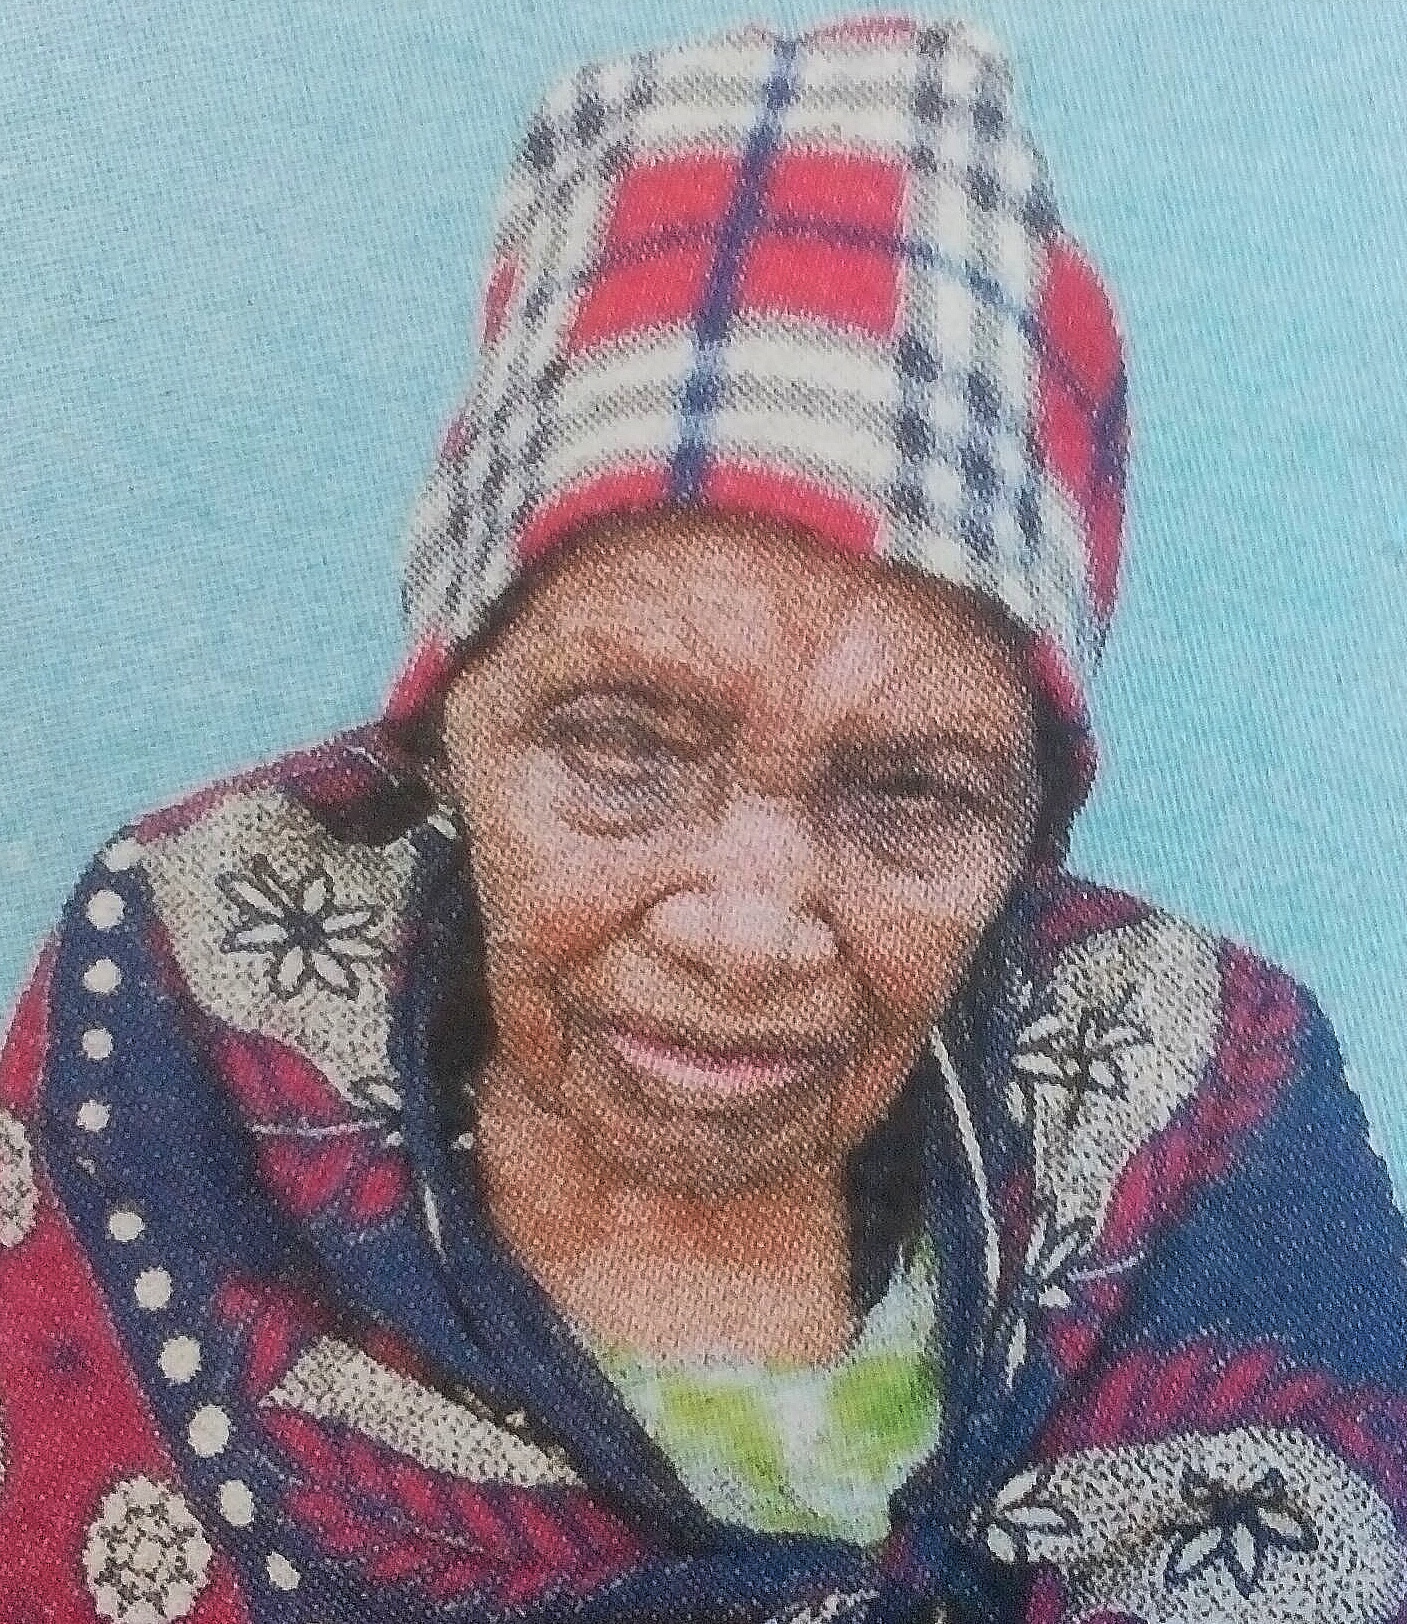 Obituary Image of Ndaisi Kaiu